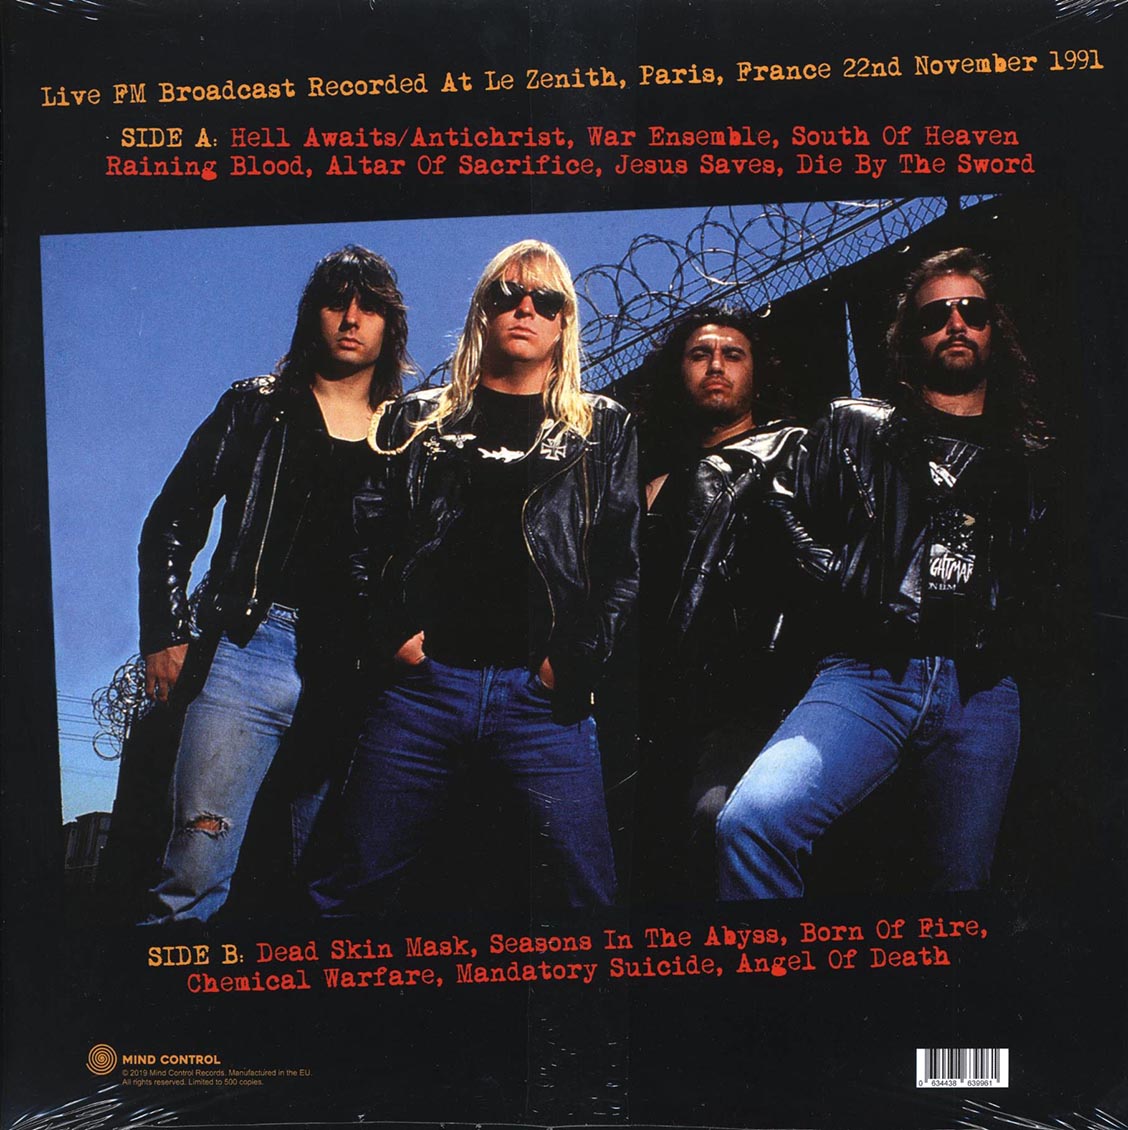 Slayer - Praying To Satan: Broadcast Recorded At Le Zenith, Paris, France 22nd November 1991 (ltd. 500 copies made) - Vinyl LP, LP